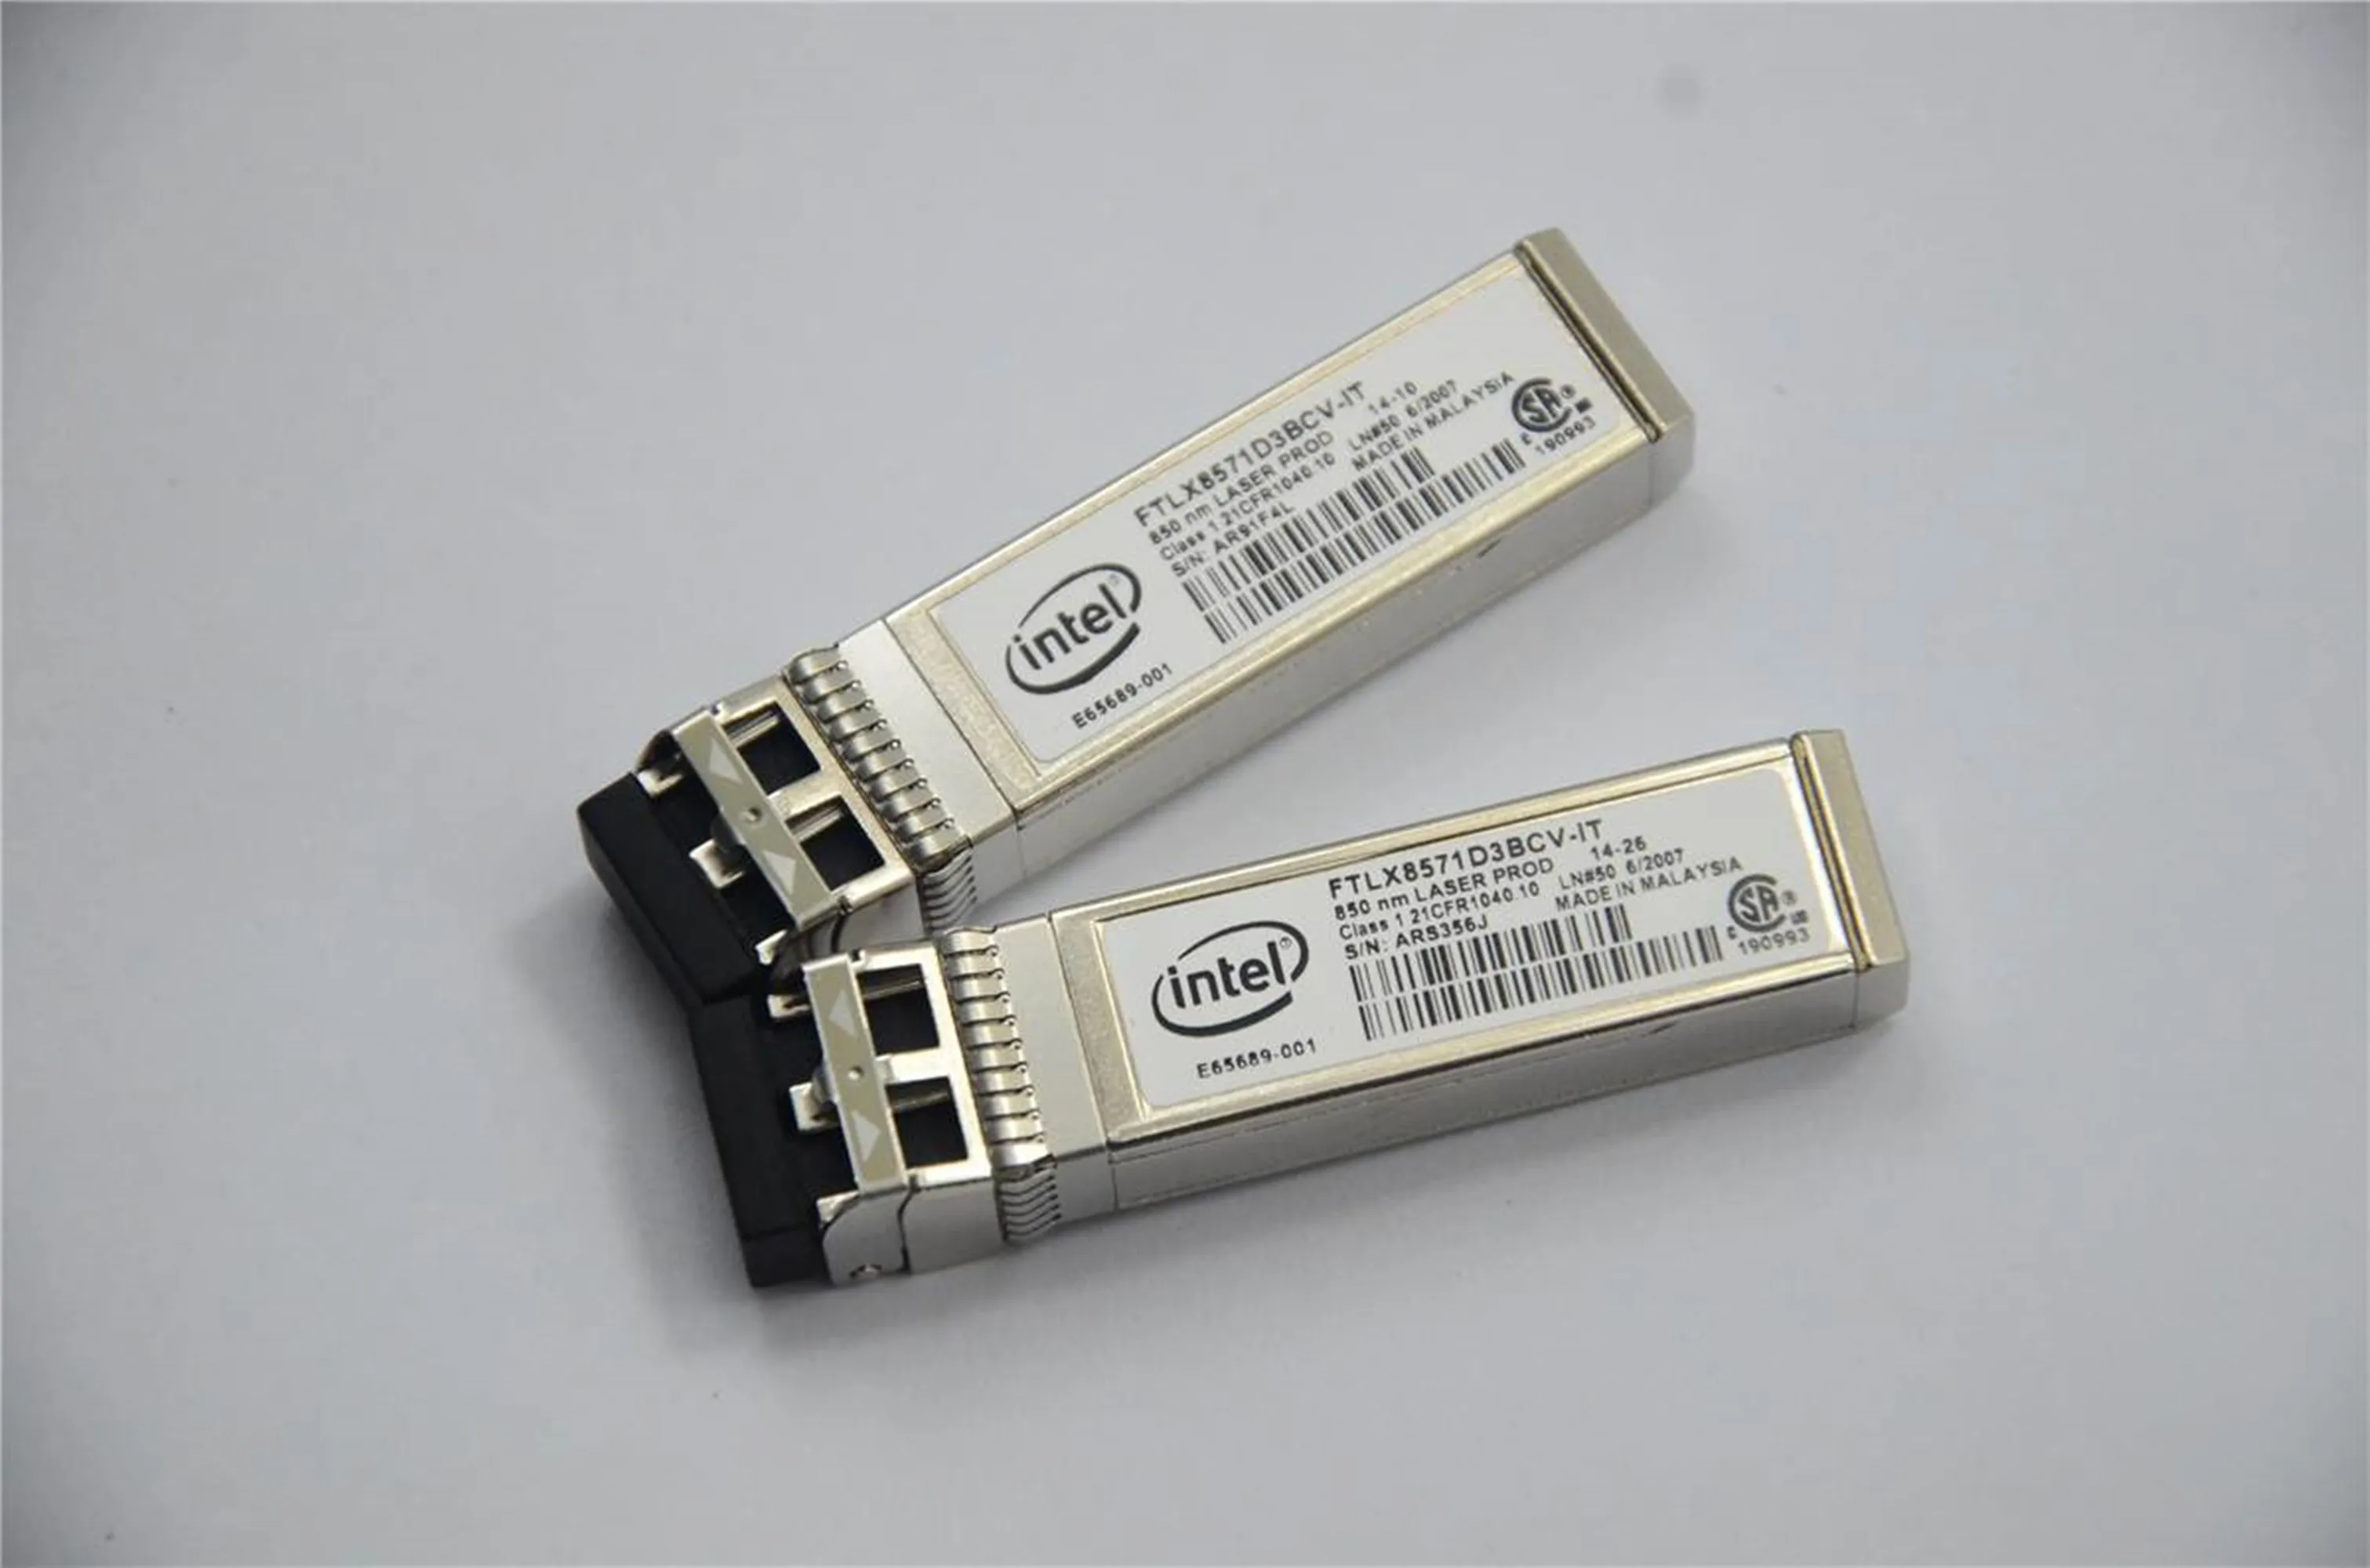 Intel transceiver 10g sfp/FTLX8571D3BCV-IT/E65689-001/for X710 X520 network adapter switch/sfp 10gb Switch Optical fiber module